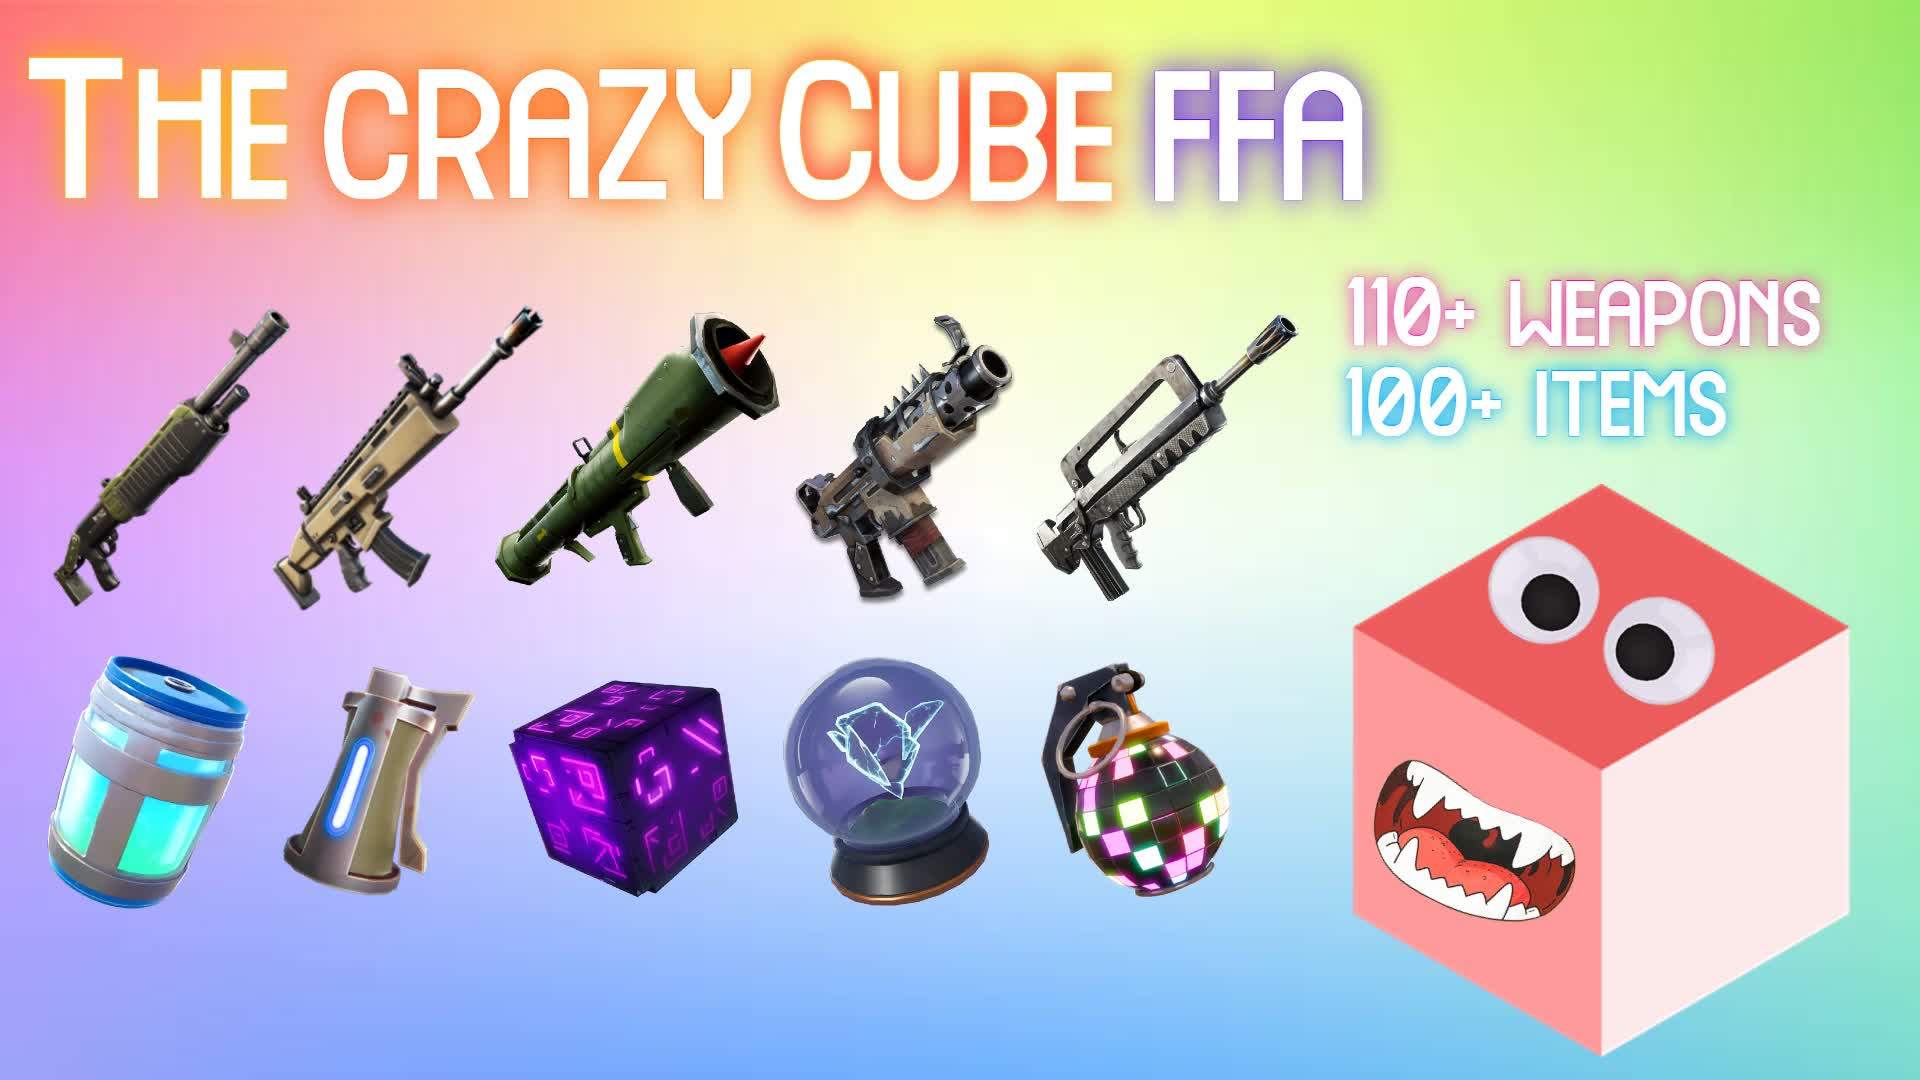 The crazy cube FFA